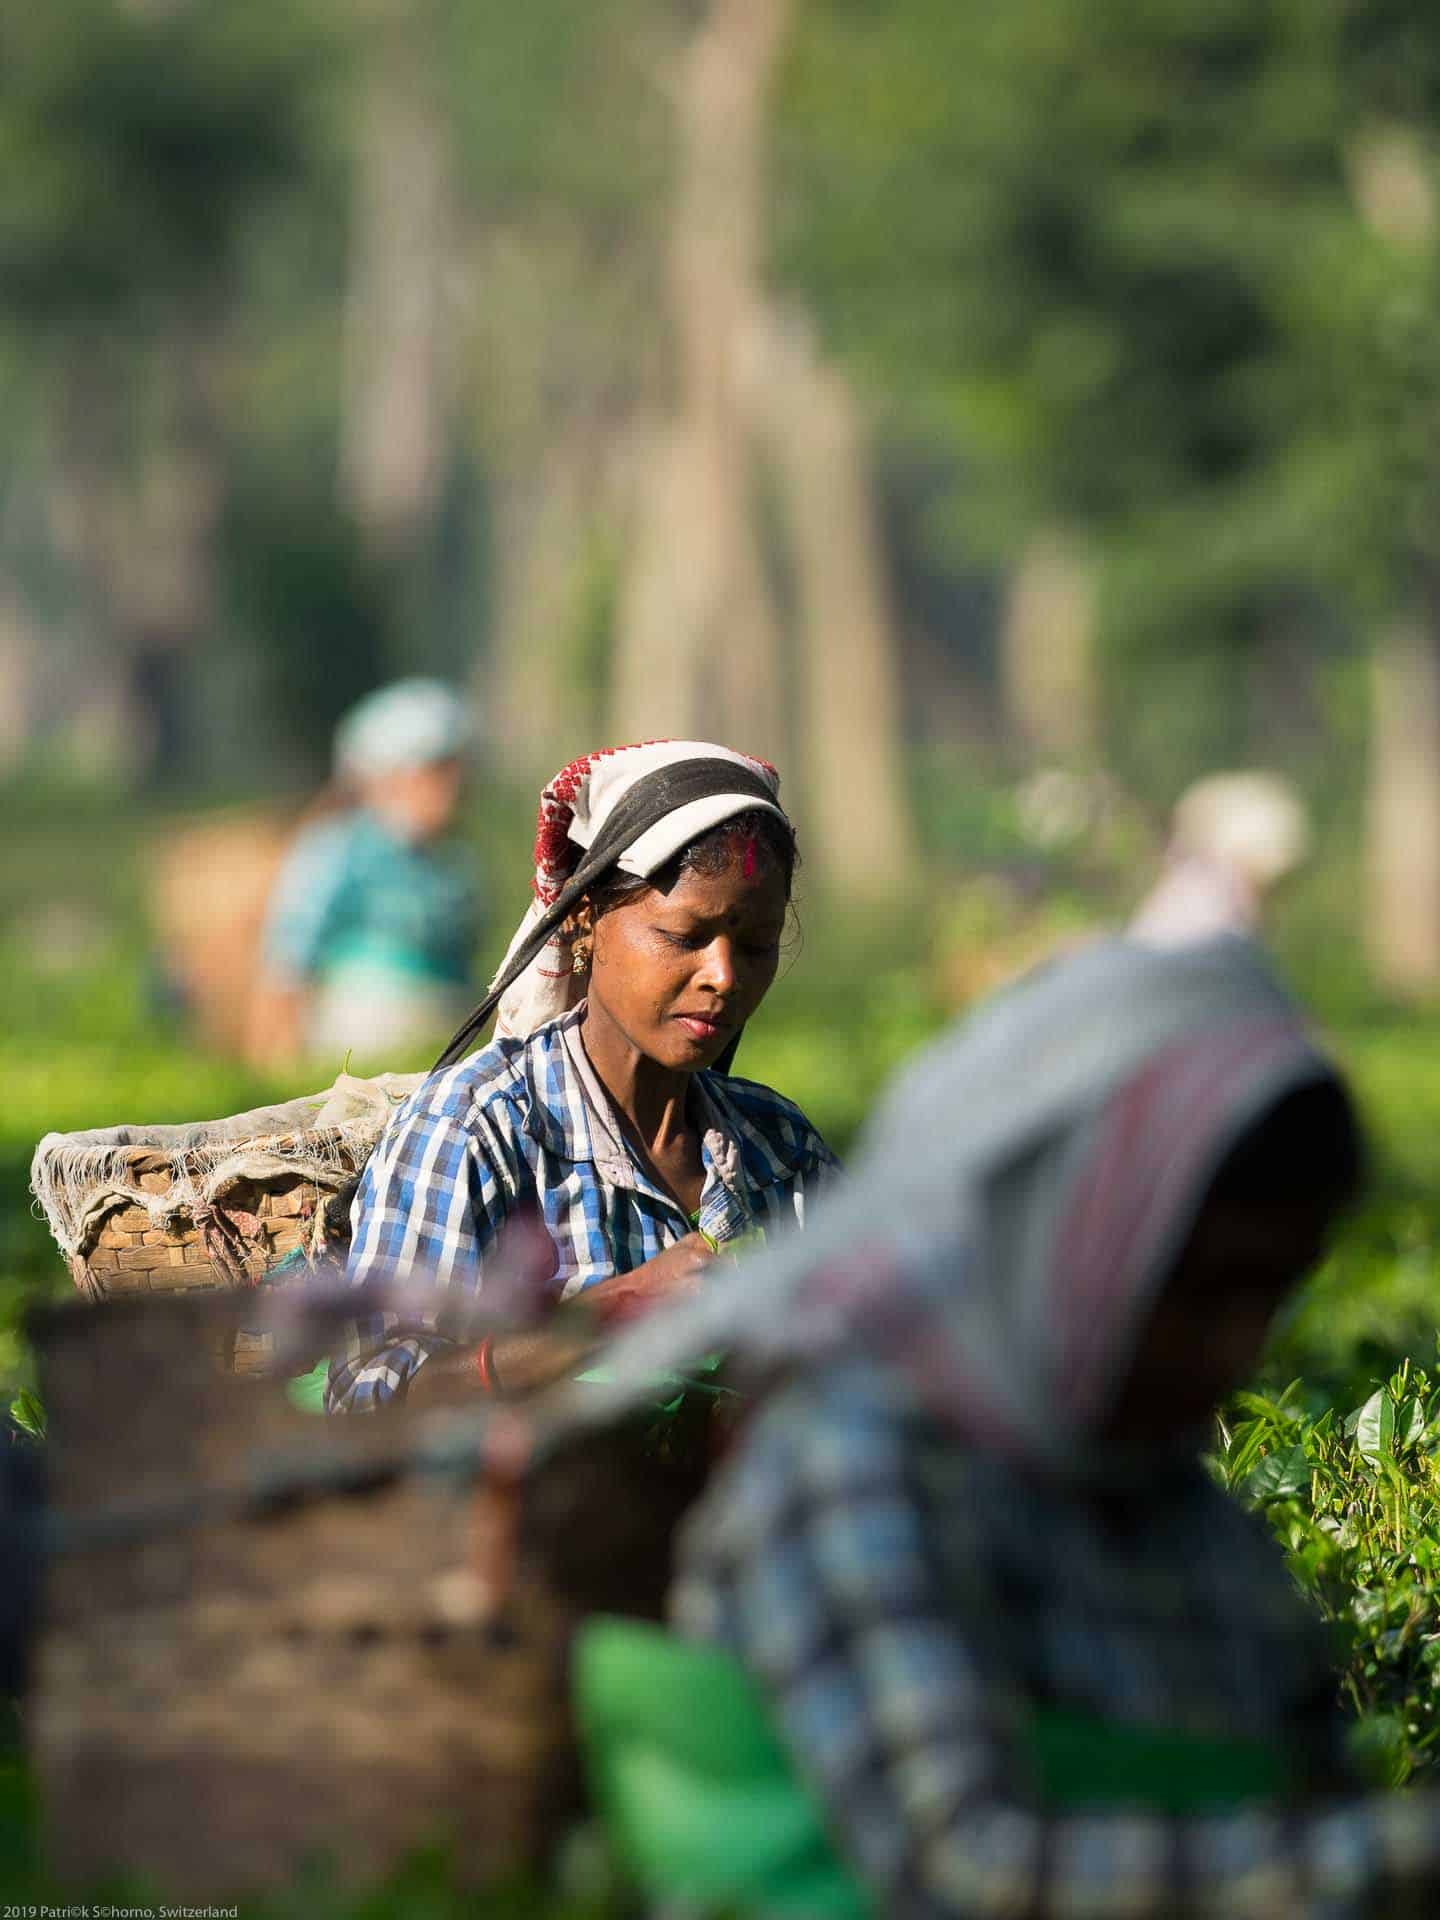 sikkim.ch | Nordostinidien und Sikkim Reisen - Bild zu Nagaland - Travelogue of tea plantations and the Hornbill Festival - Information for your trip to India